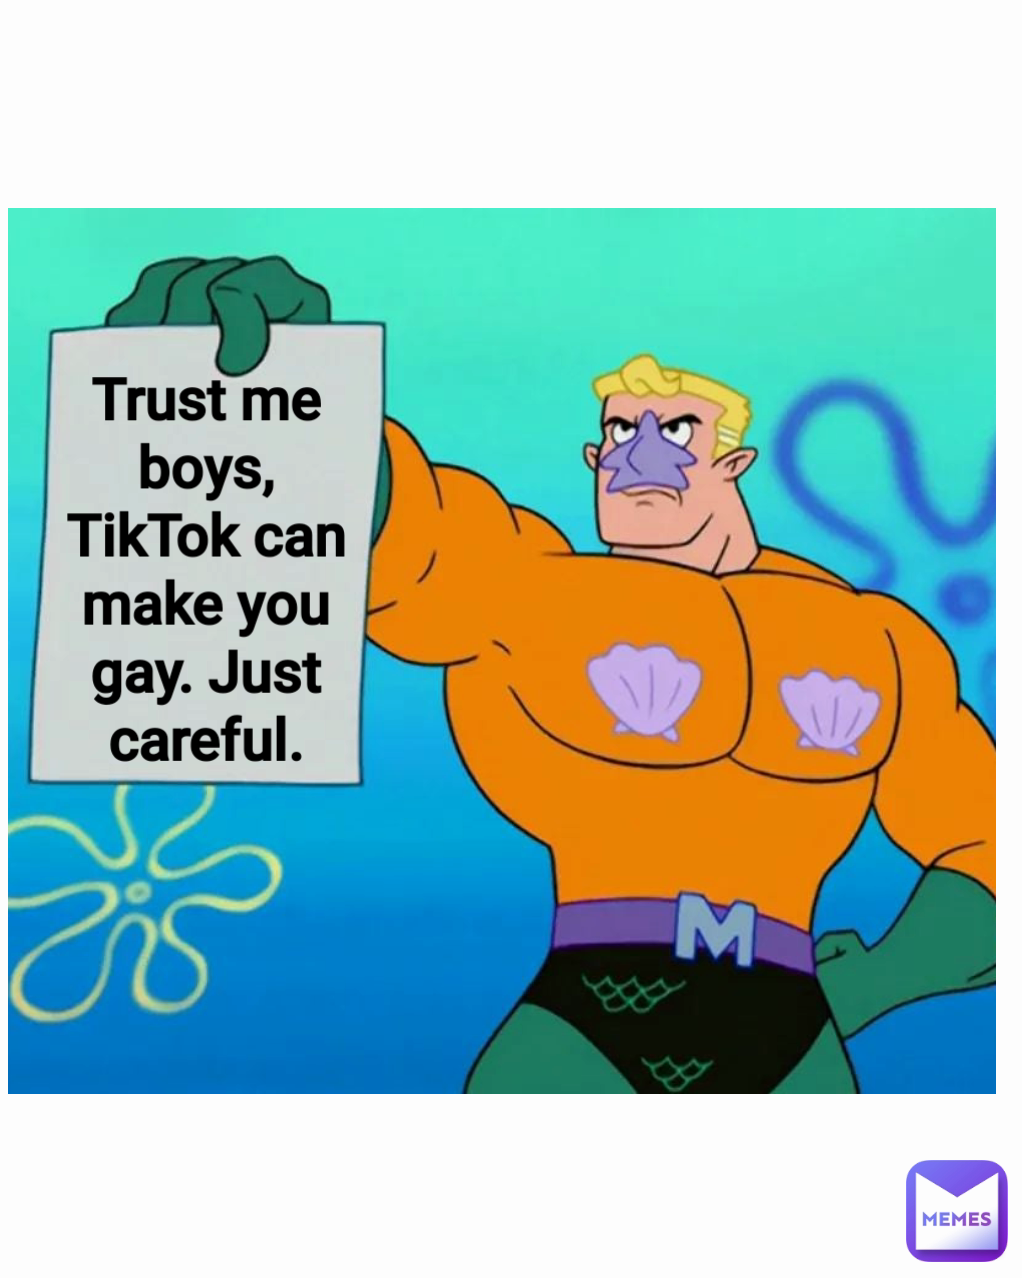 Trust me boys, TikTok can make you gay. Just careful.